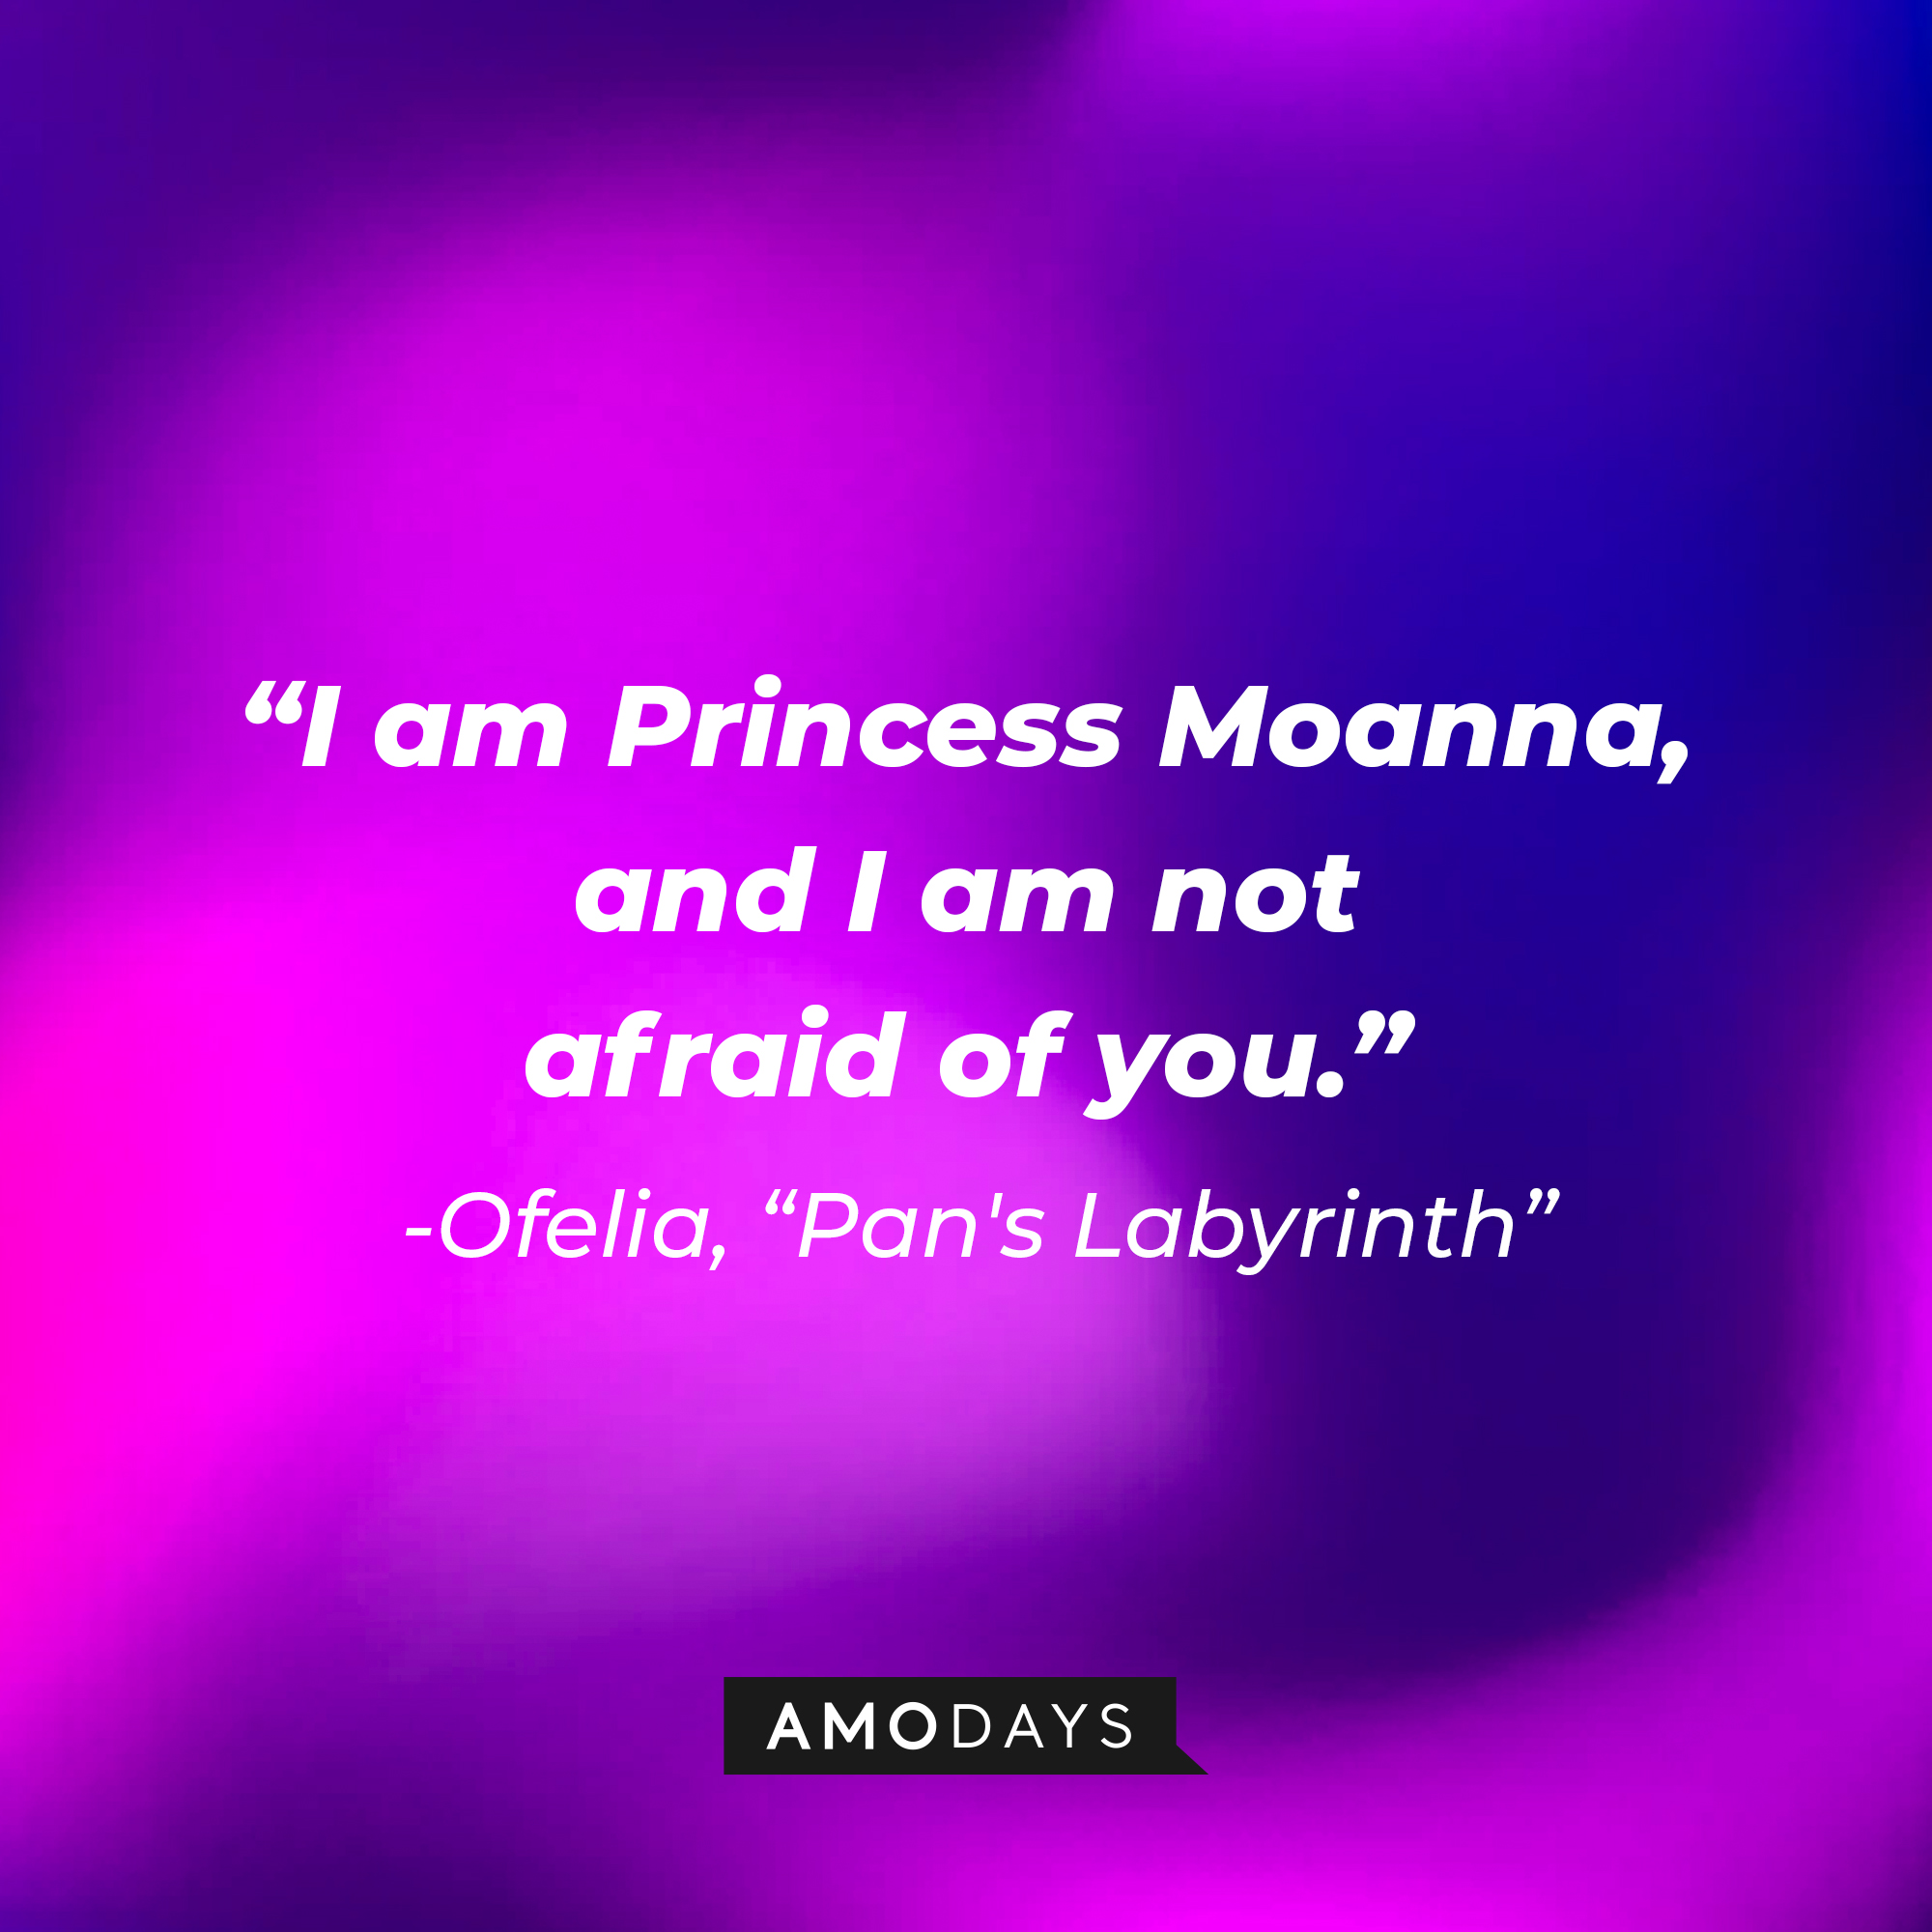 Ofelia's quote: "I am Princess Moanna, and I am not afraid of you." | Image: Amodays